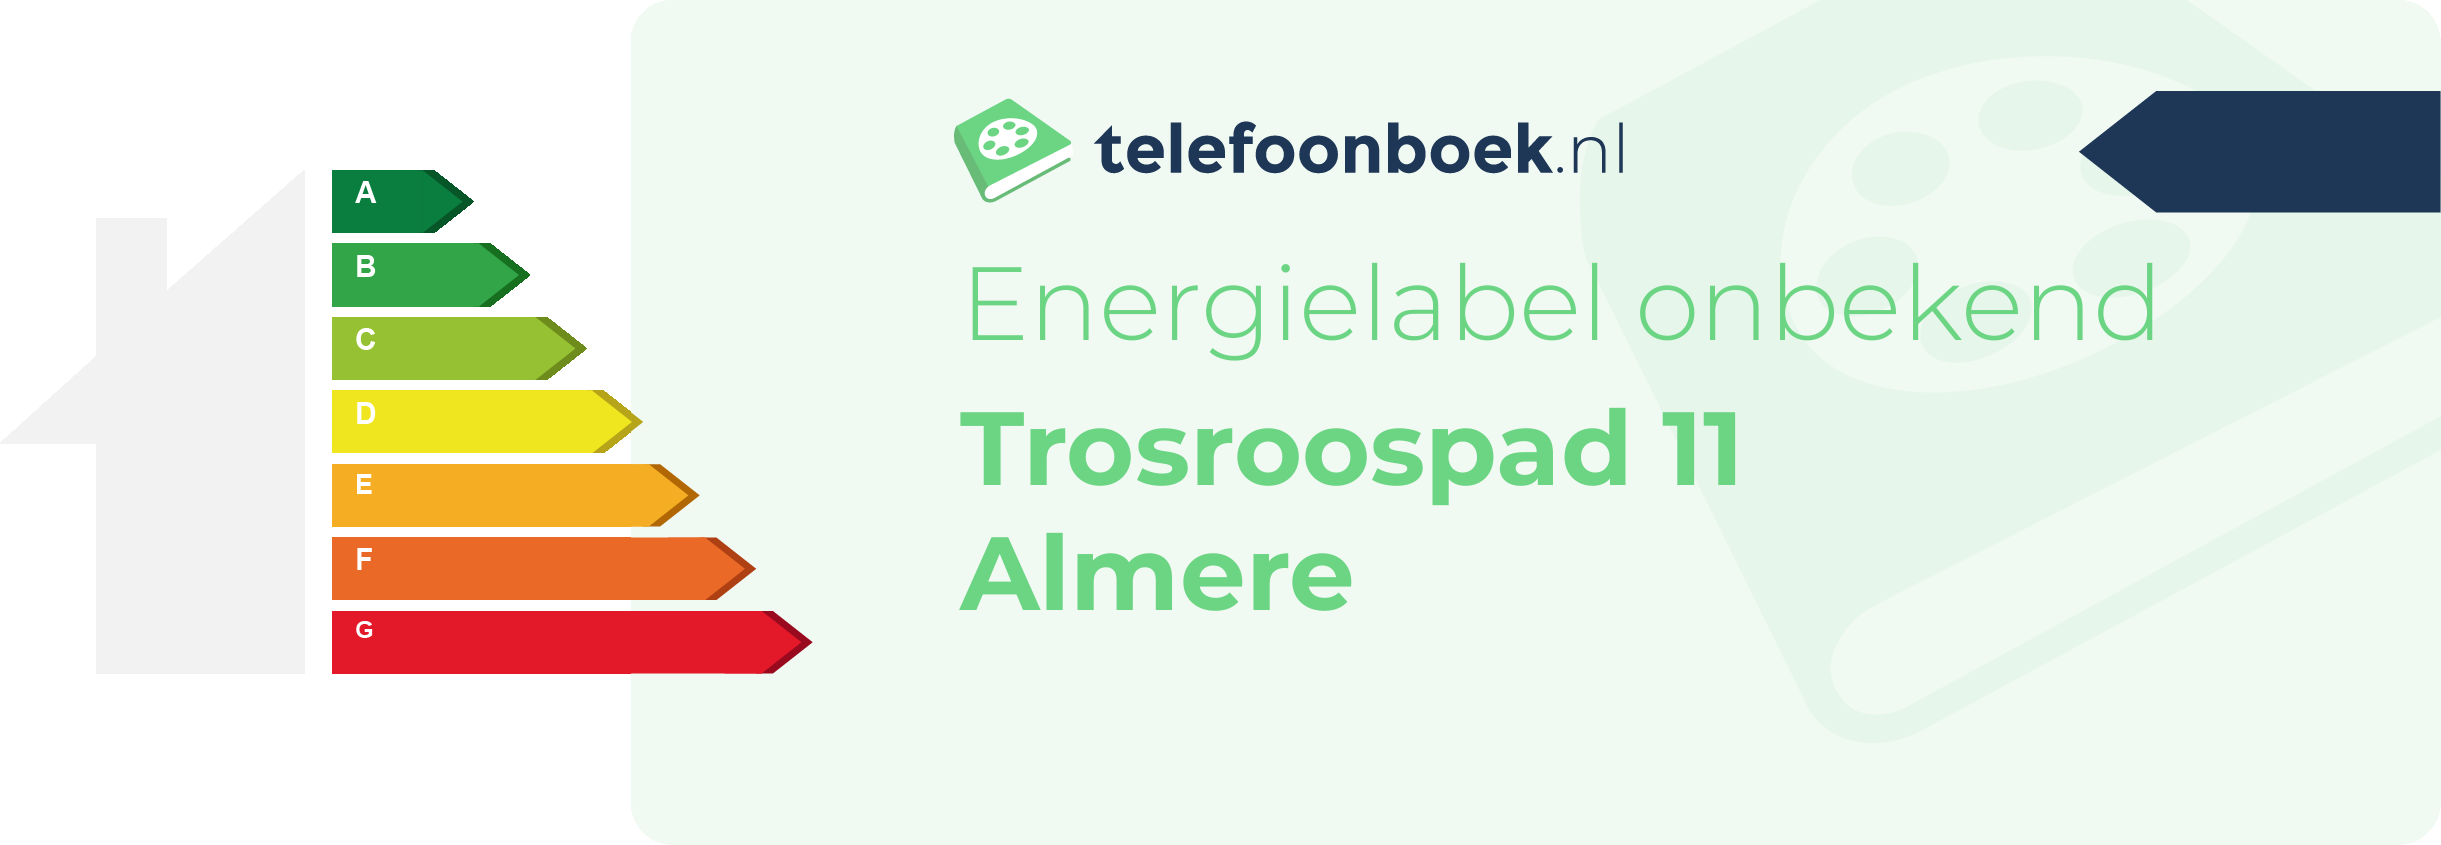 Energielabel Trosroospad 11 Almere